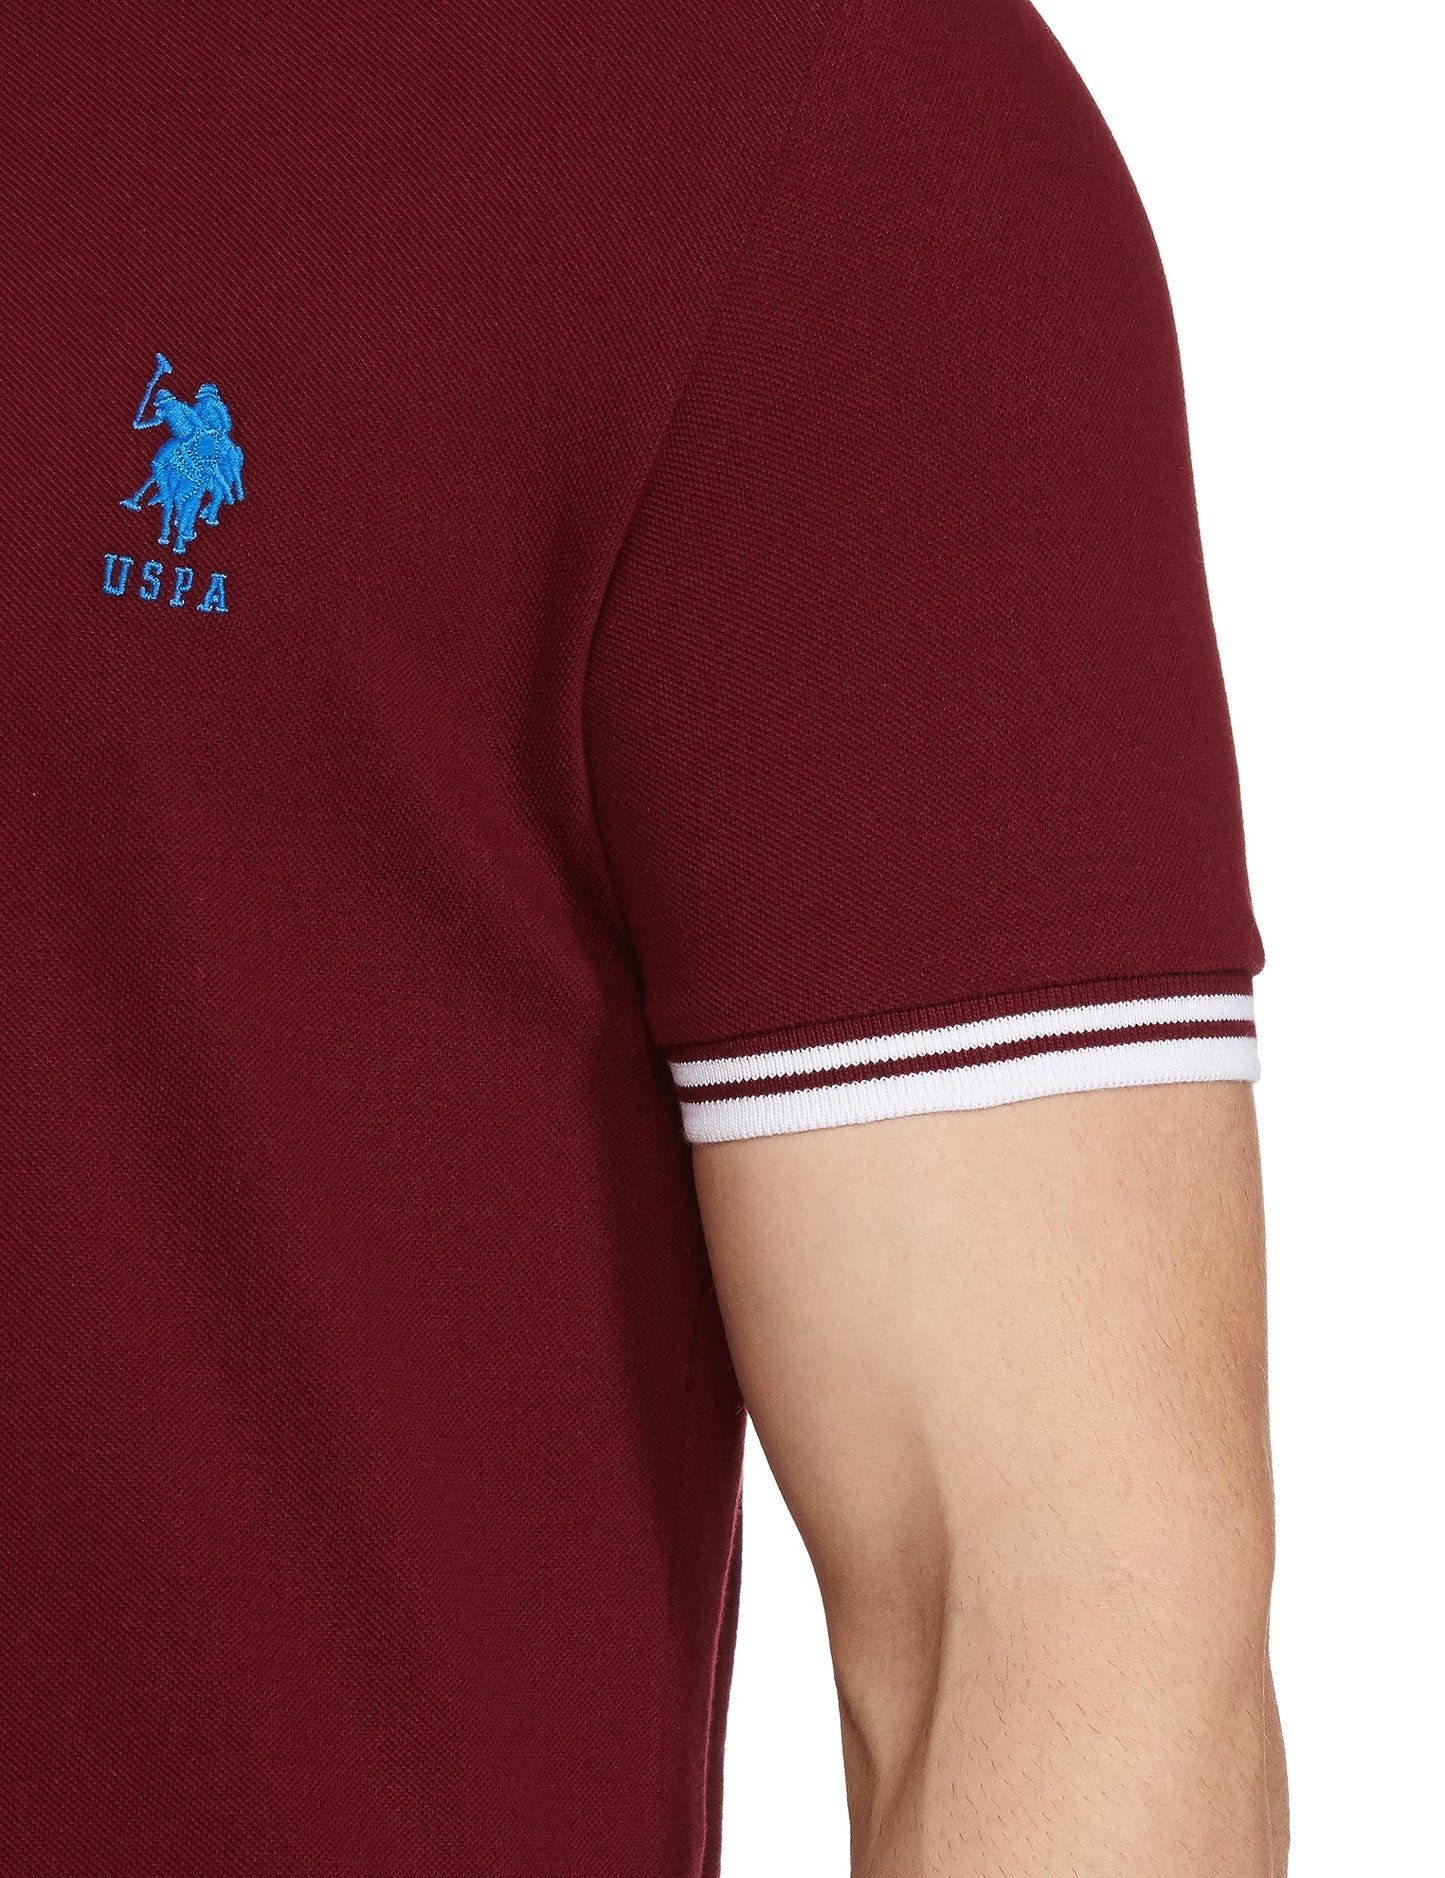 U.S. POLO ASSN. Men's Regular Fit T-Shirt (USTSHS1543_Maroon_XL)